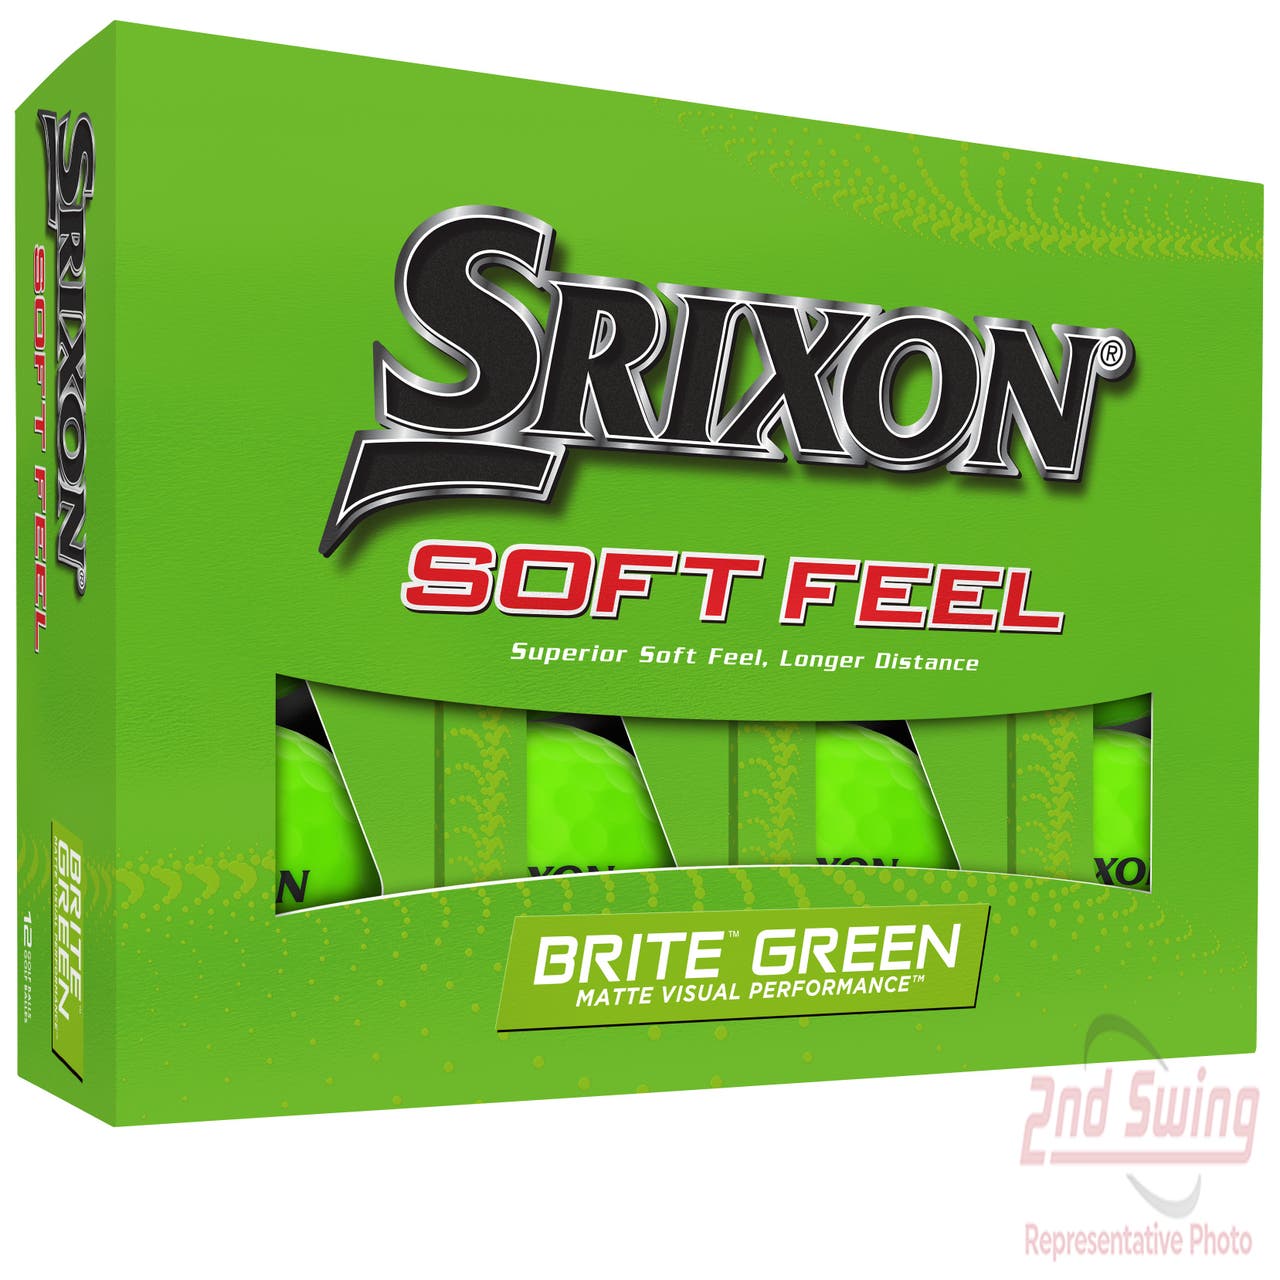 Srixon Soft Feel Brite Green 13 Golf Balls